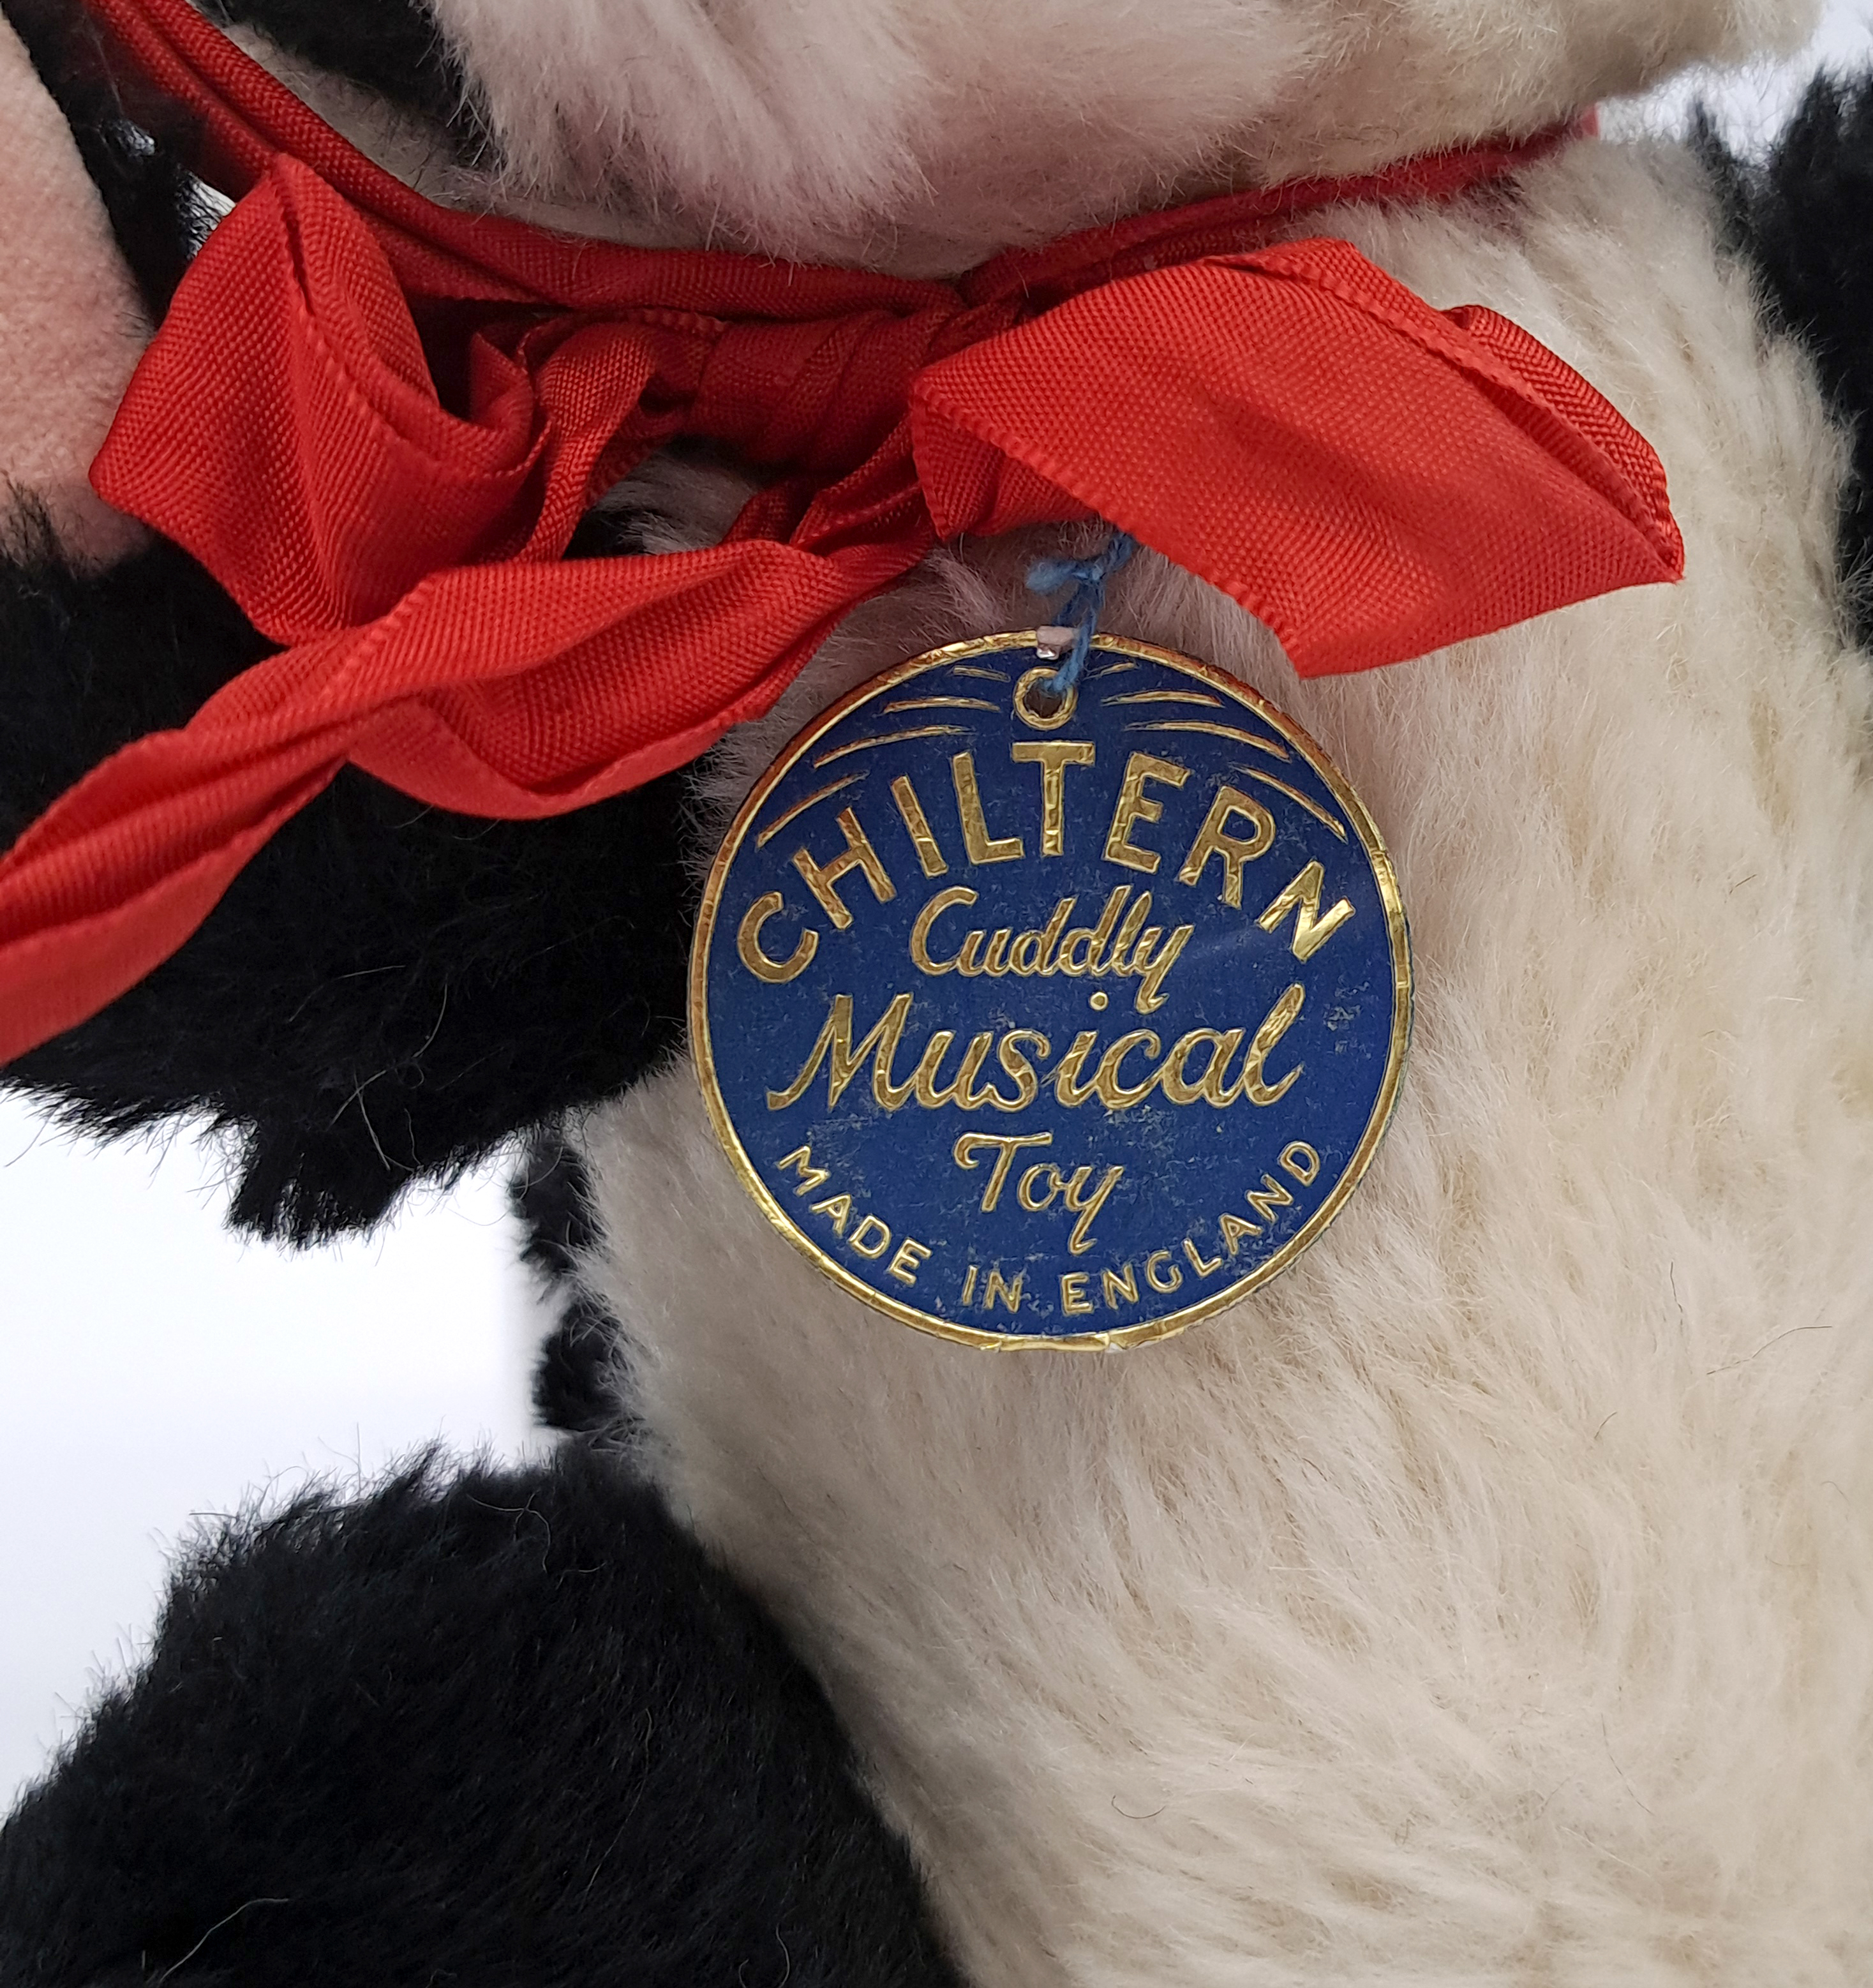 Chiltern Cuddly Musical Toy panda  - Image 2 of 4